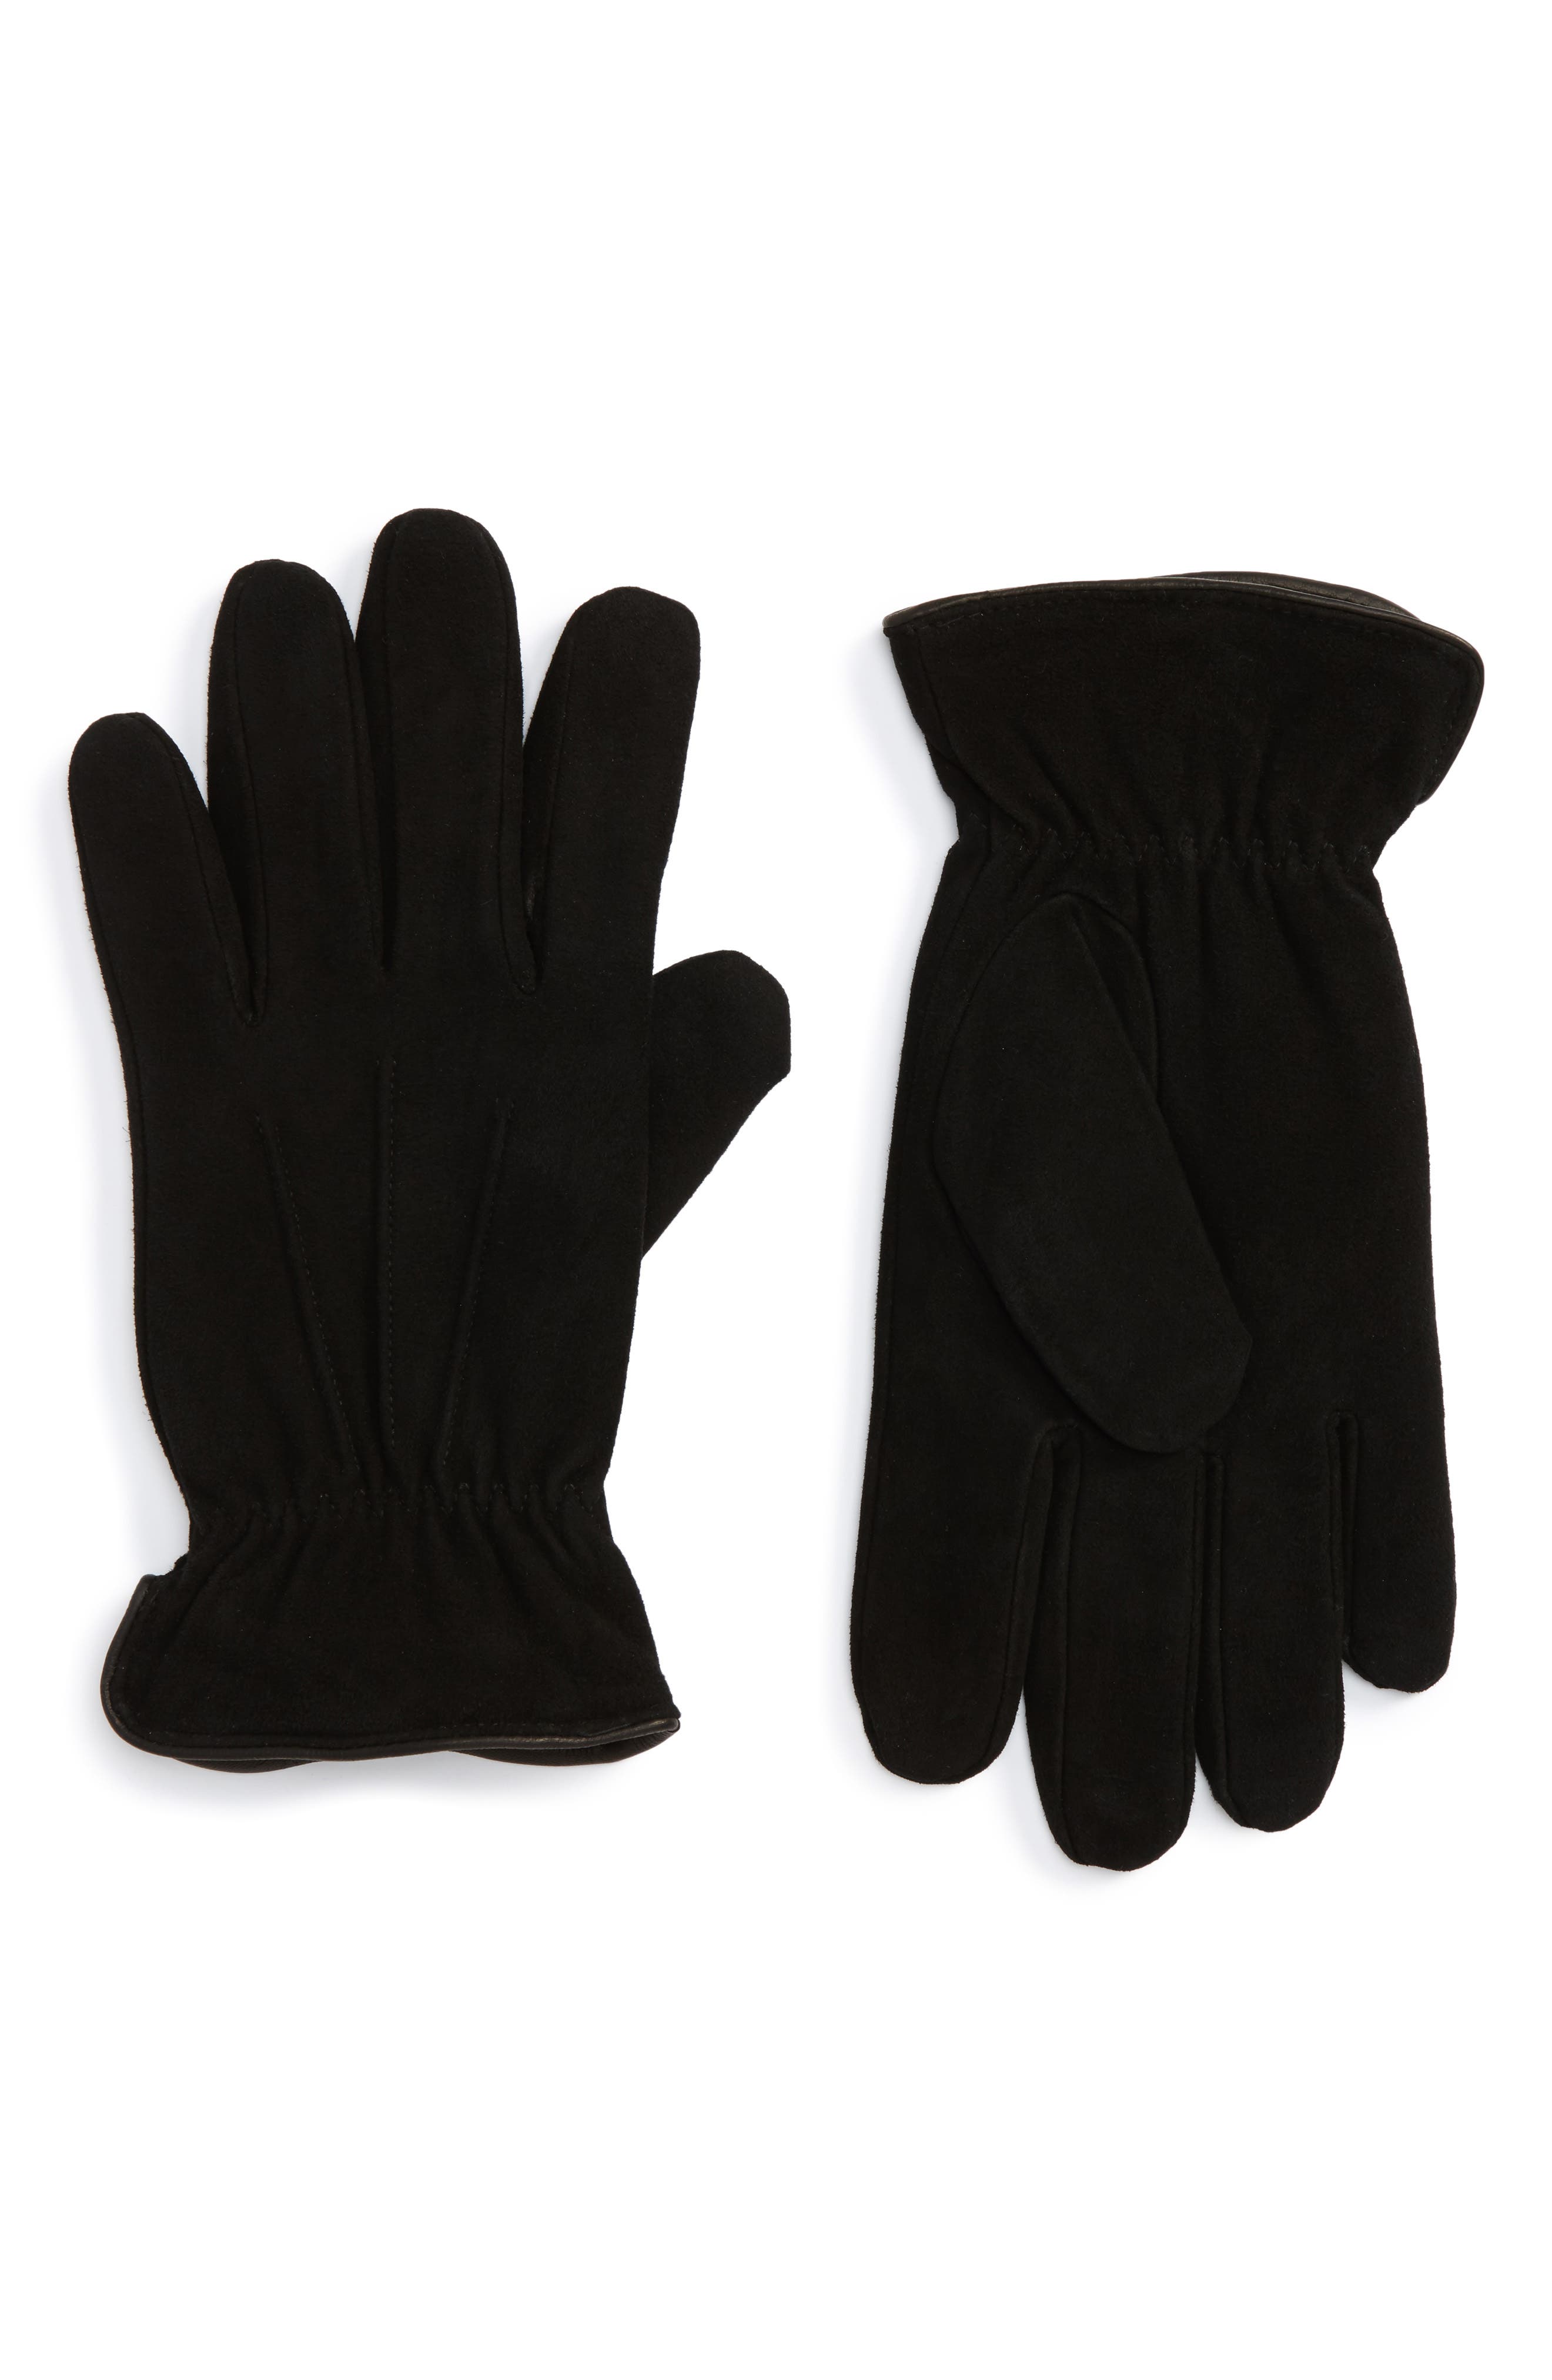 Mens Black & Red Winter Gloves Size 7 